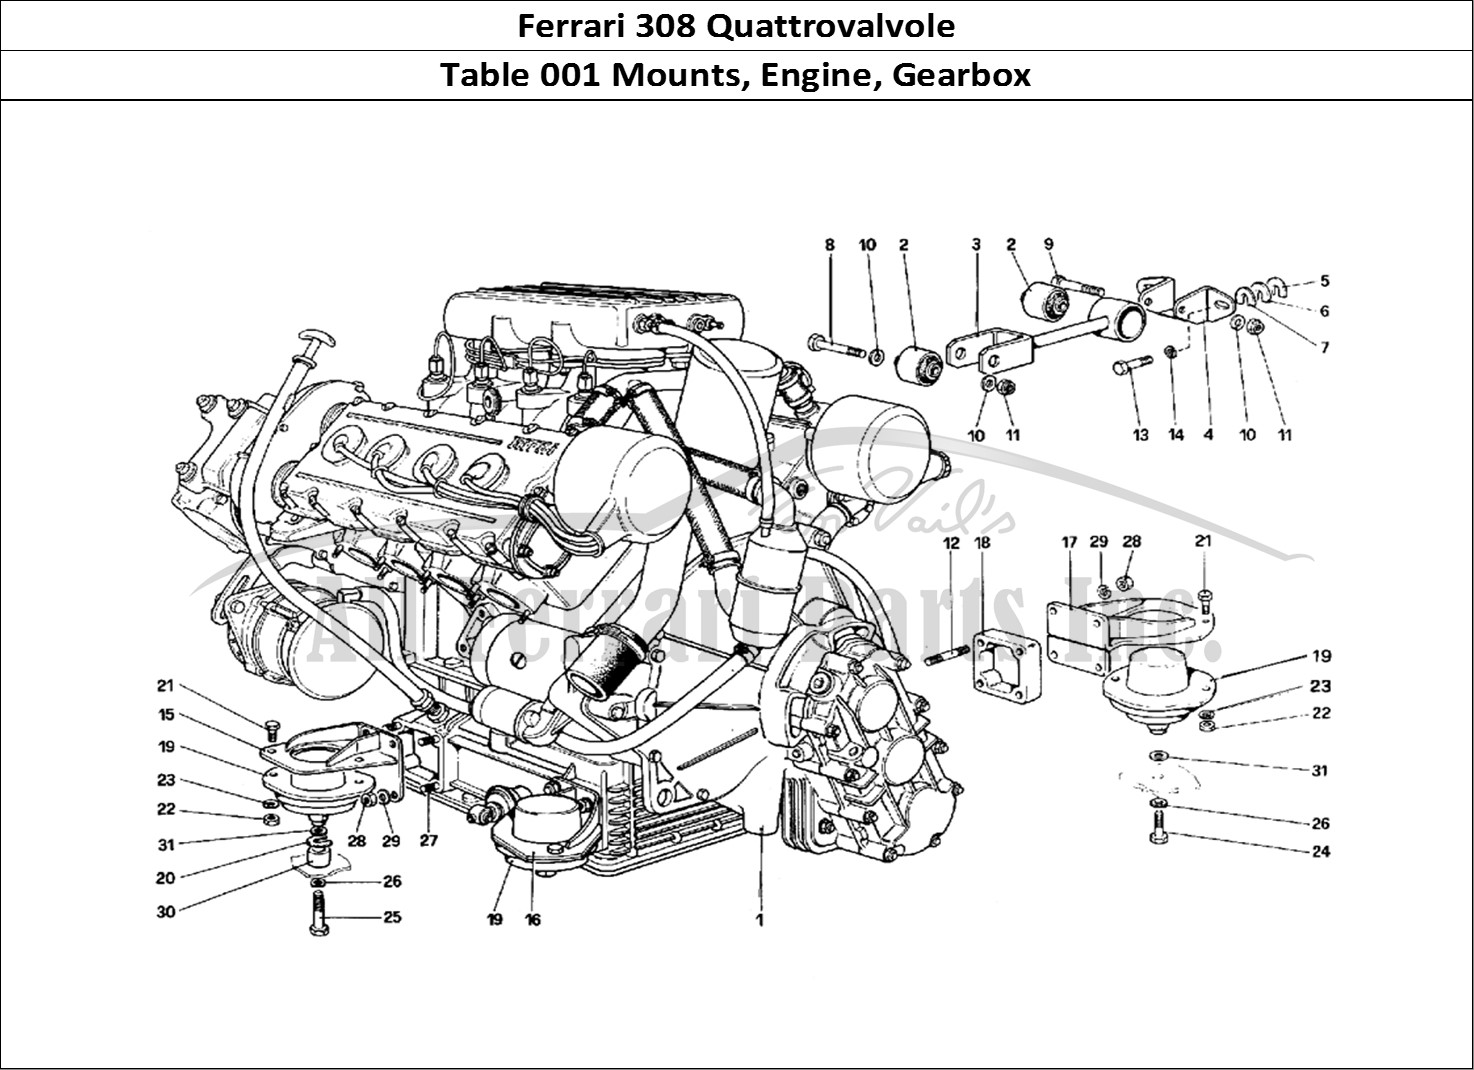 Ferrari Parts Ferrari 308 Quattrovalvole (1985) Page 001 Engine - Gearbox and Supp